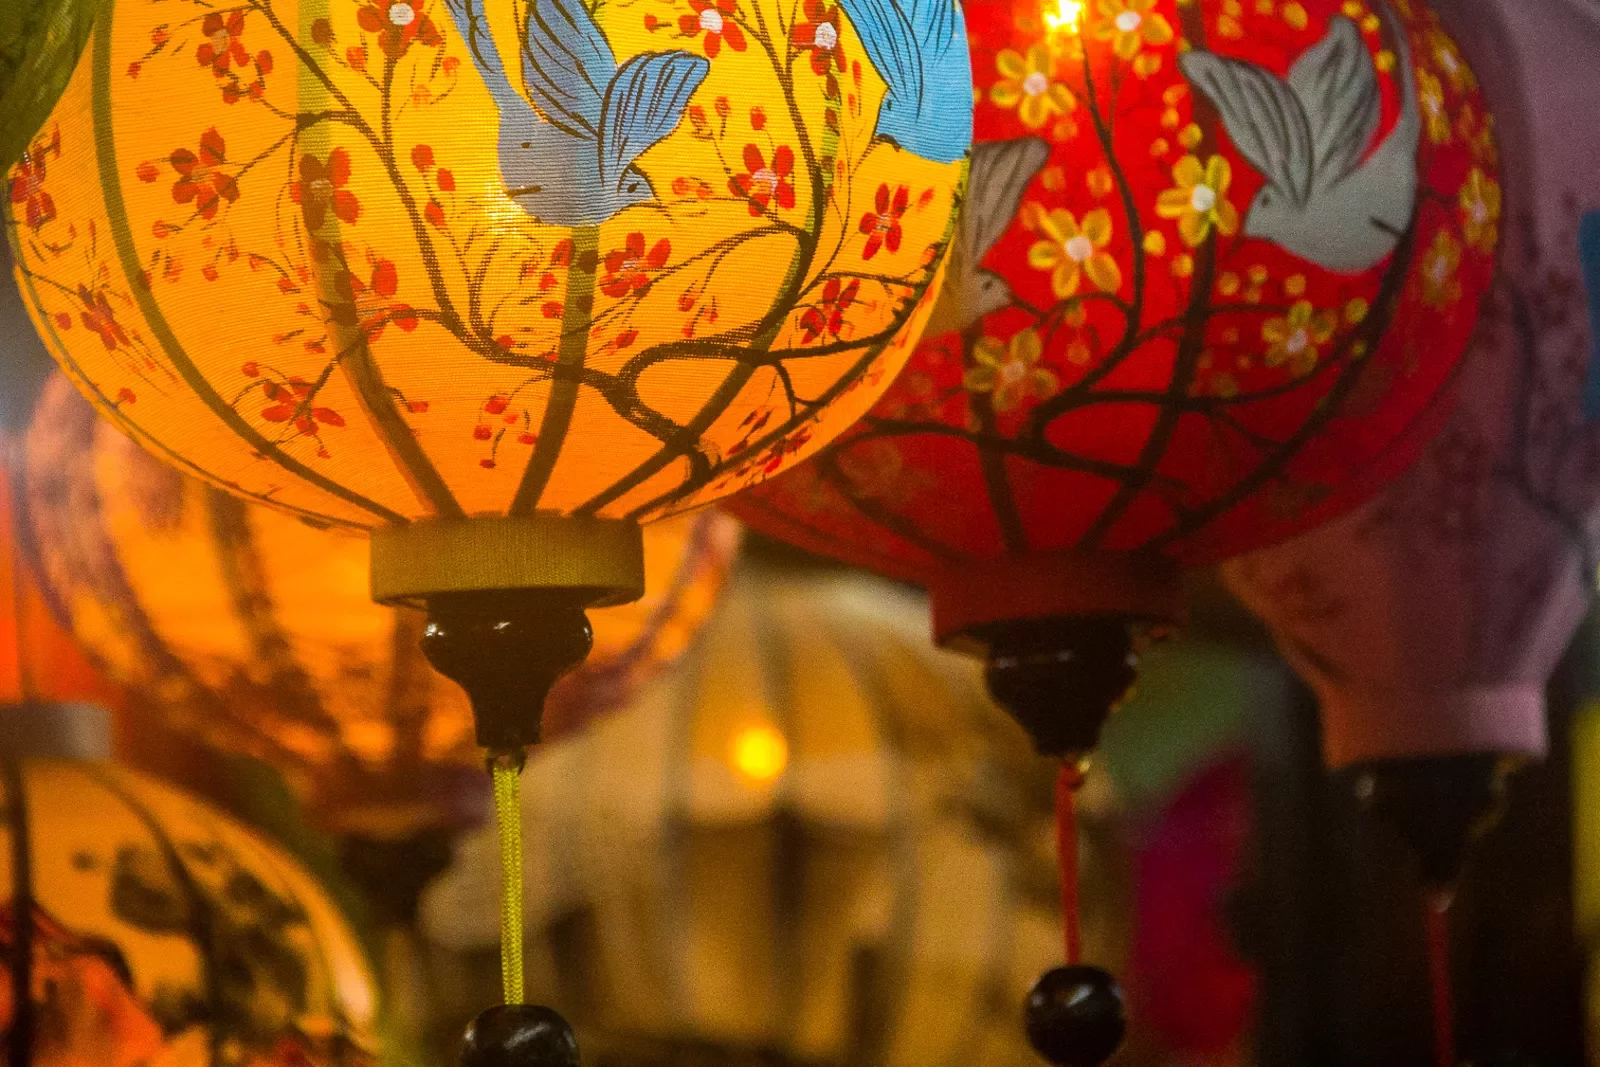 Traditional lanterns in Vietnam